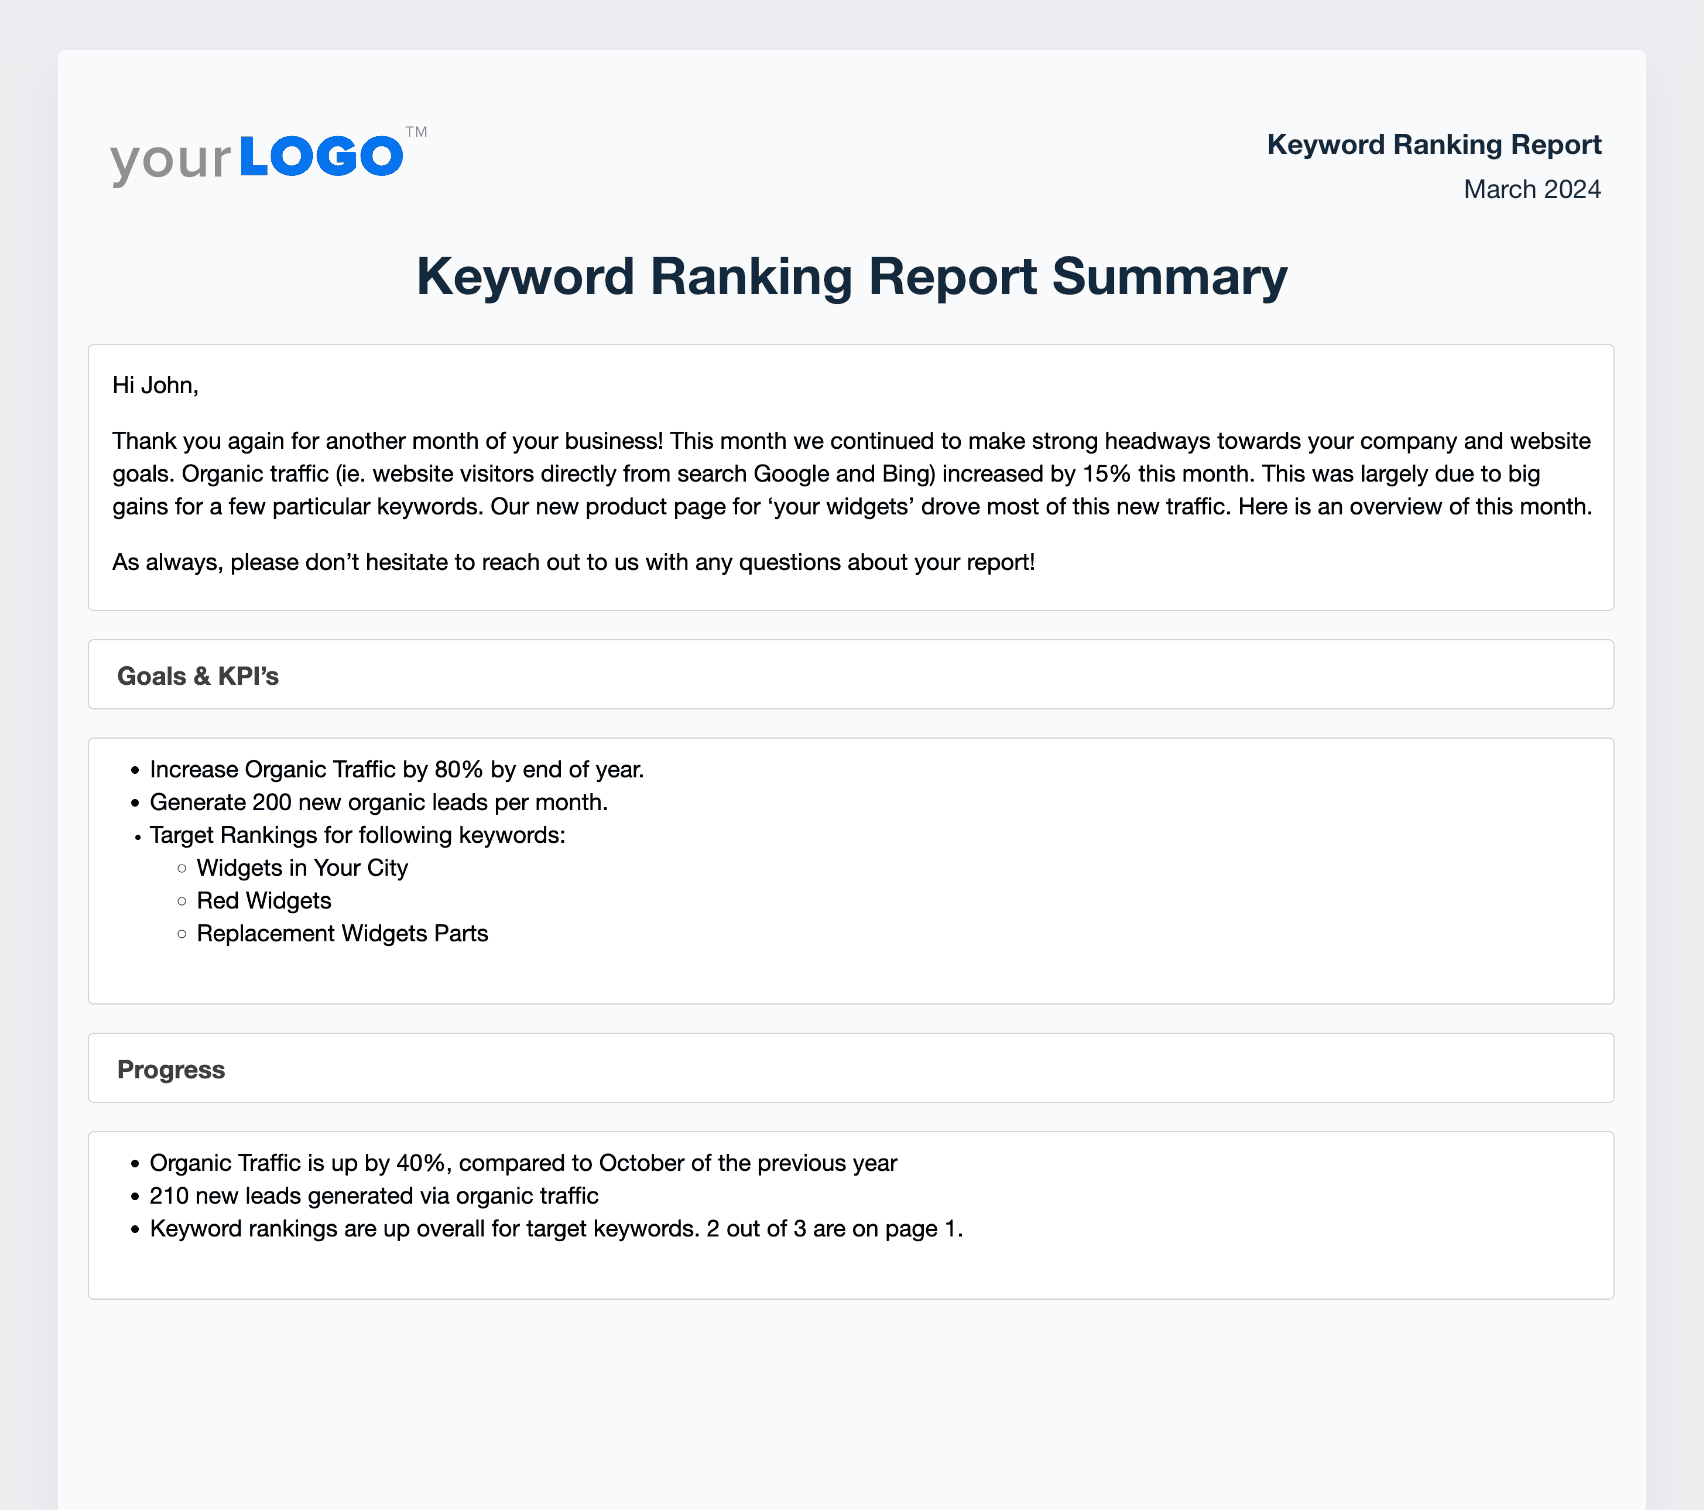 Keyword ranking report summary example